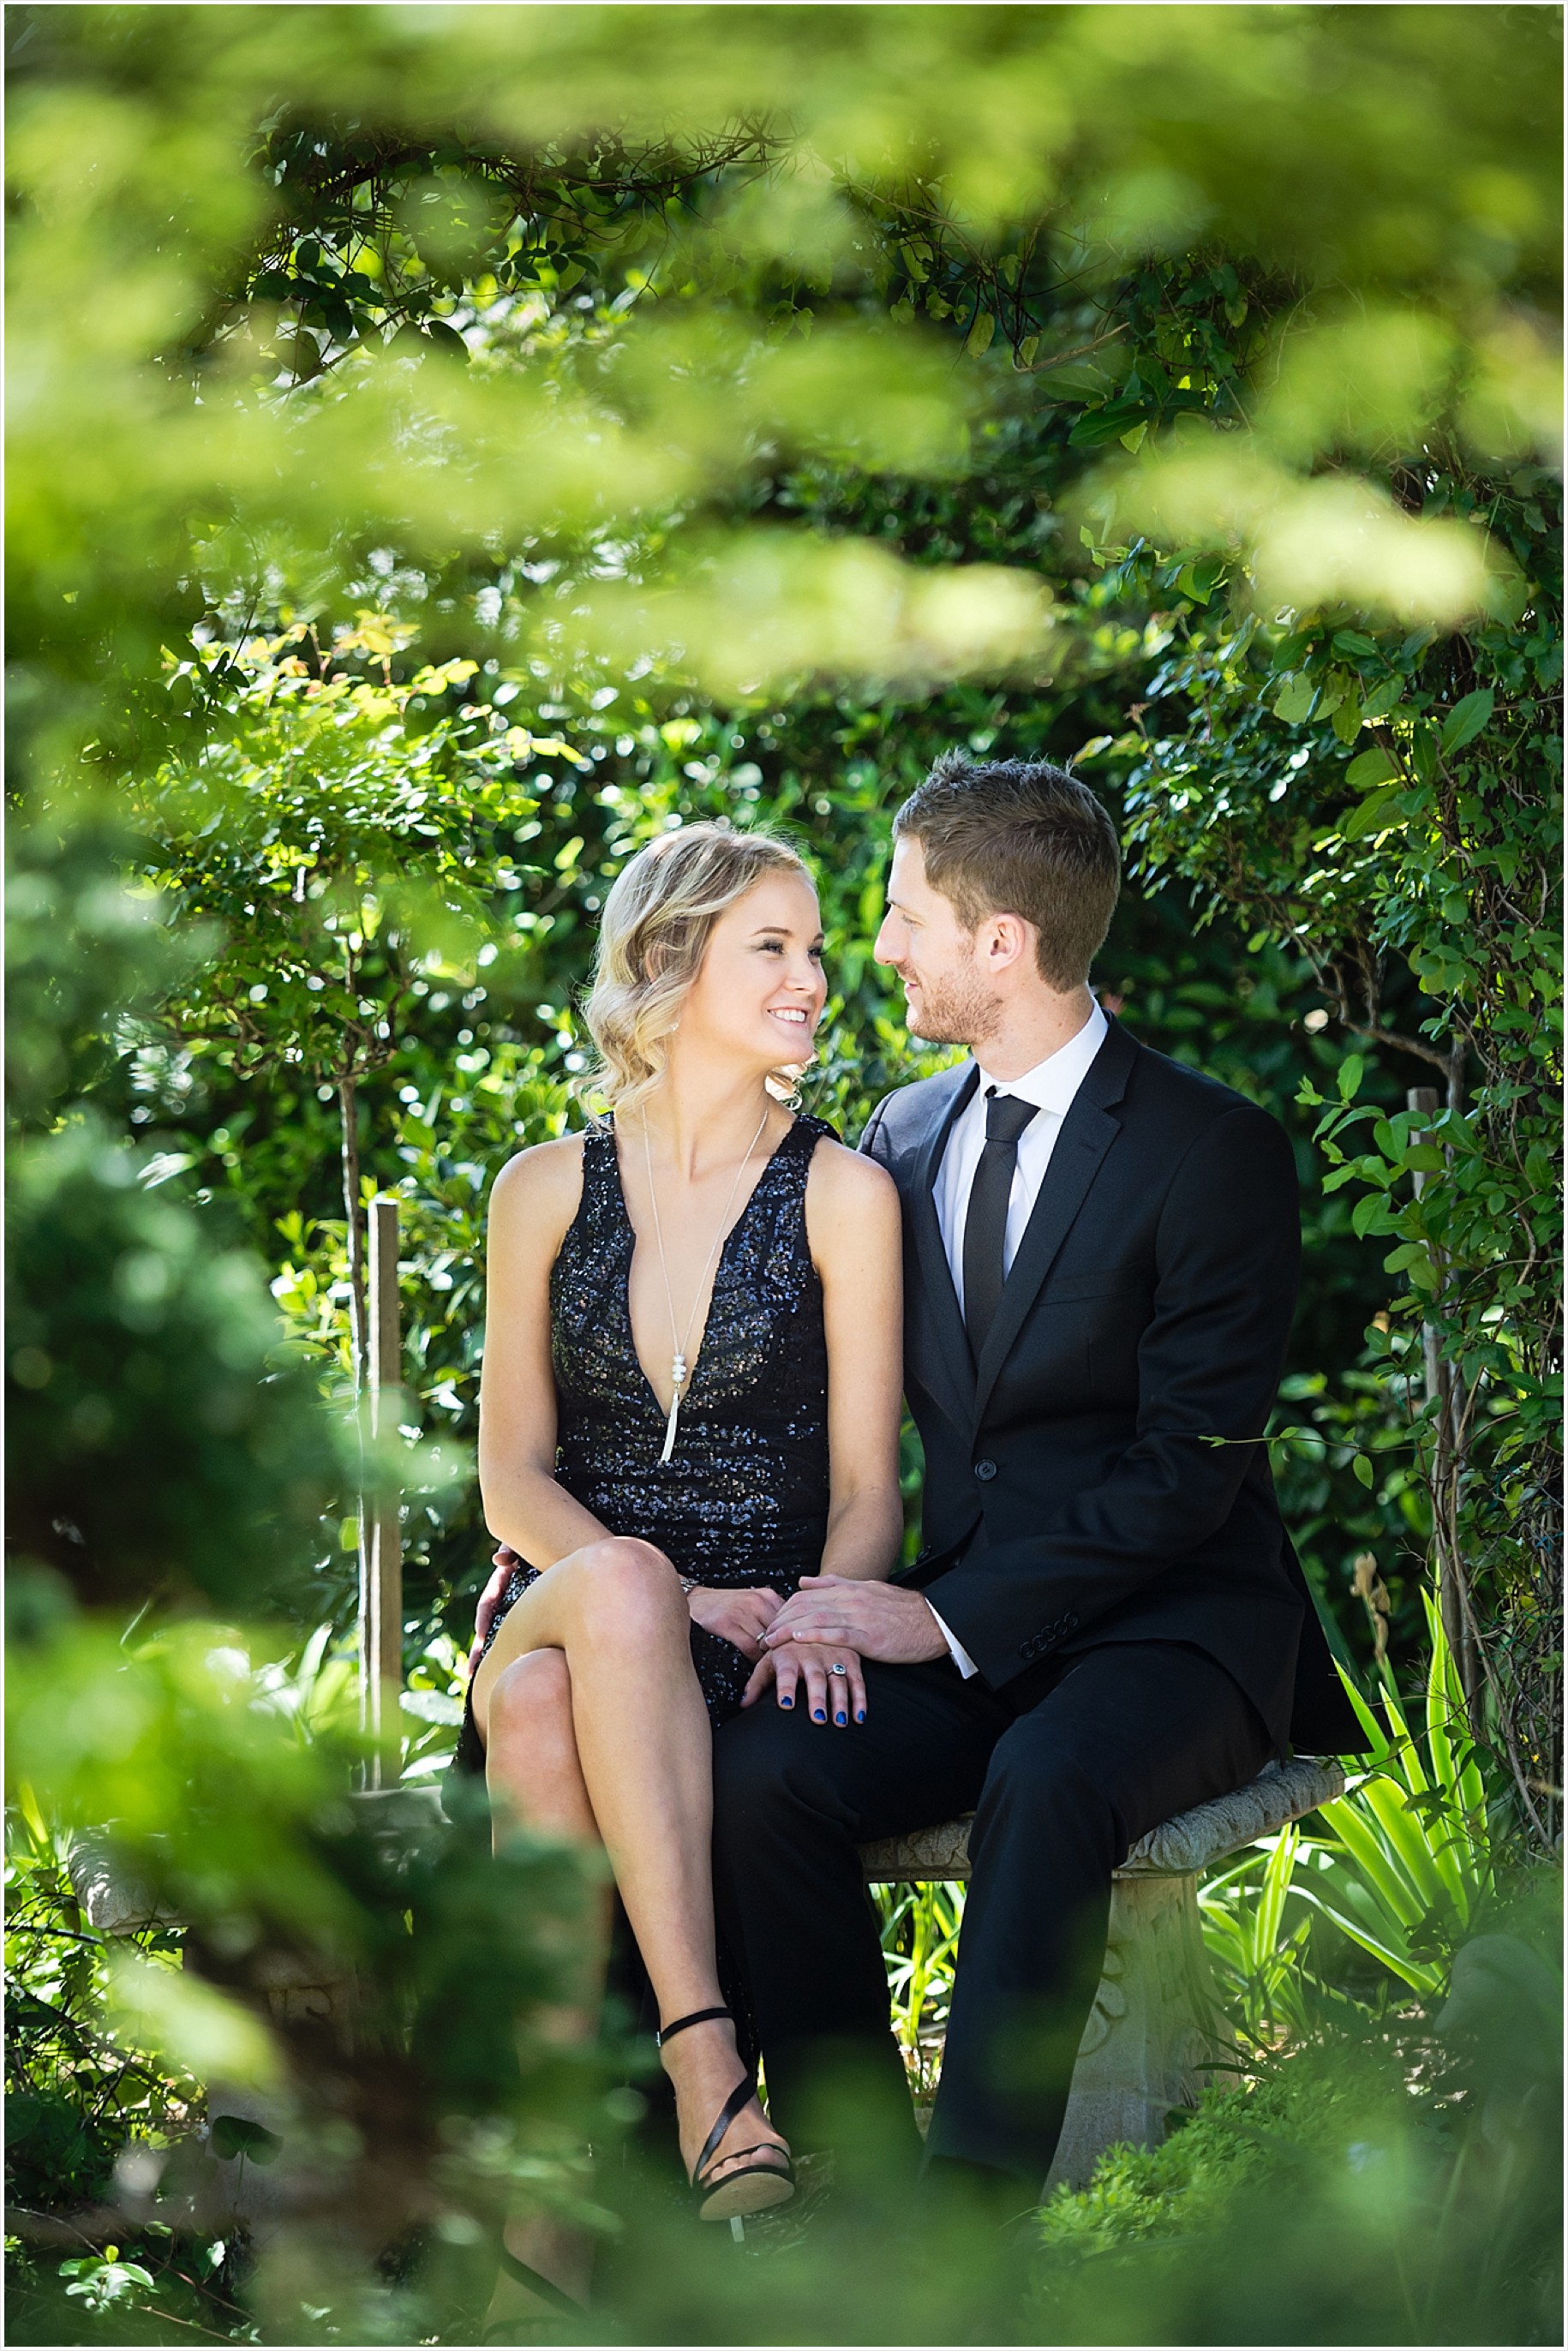 vw Beetle engagement couple photos | Adelaide wedding 